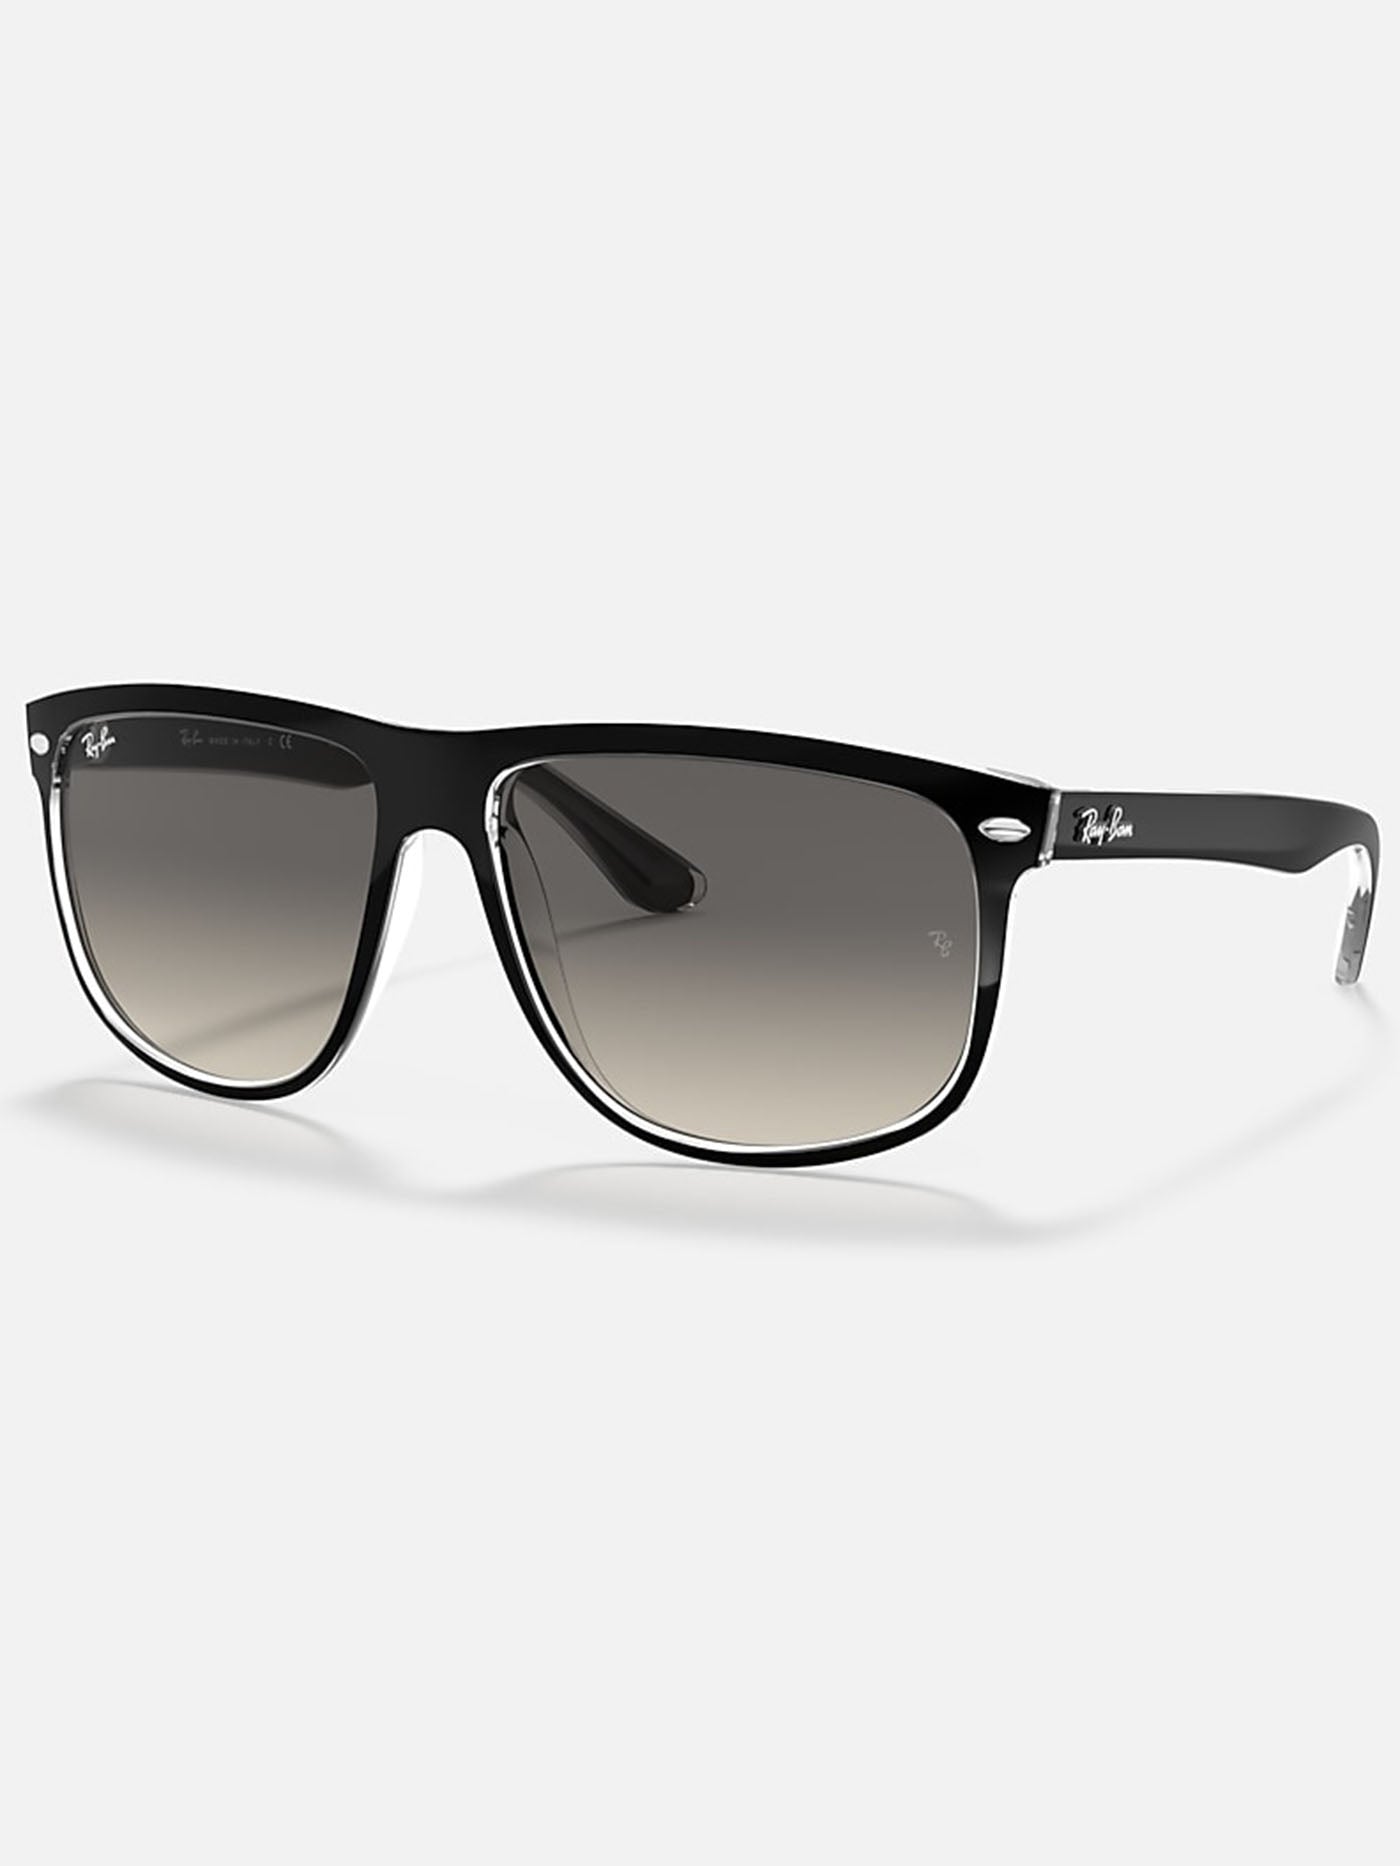 Ray Ban 2024 Boyfriend Black On Transparent/Grey Gradient Sunglasses